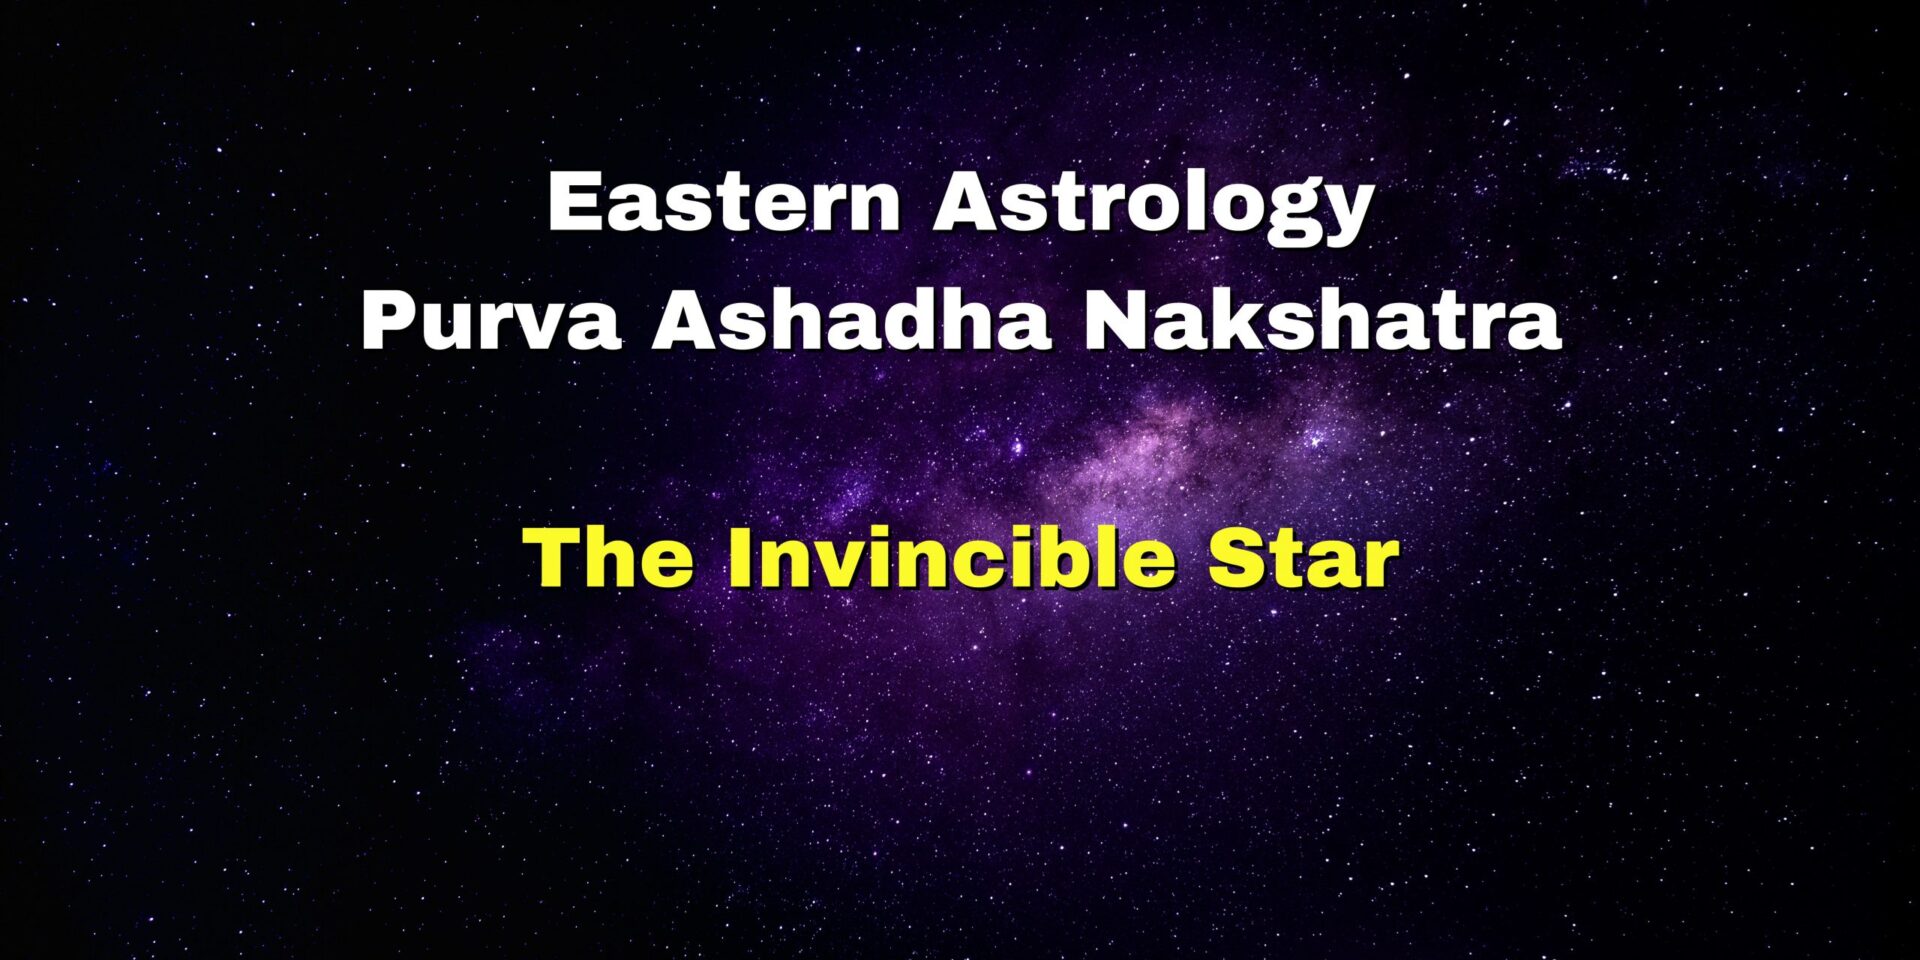 Eastern Astrology : Purva Ashadha Nakshatra - The Invincible Star